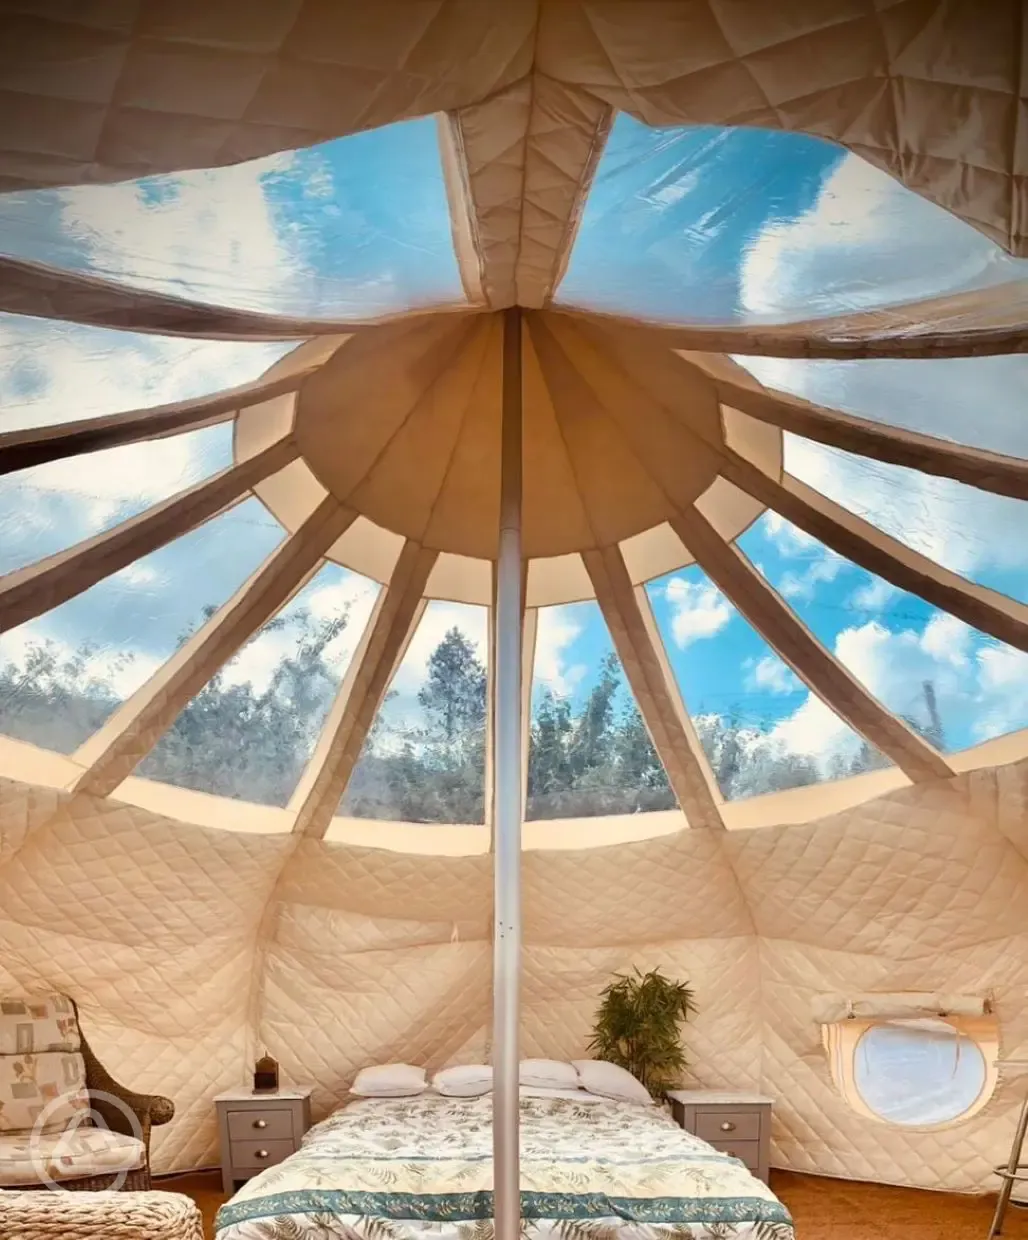 Stargazer bell tent interior